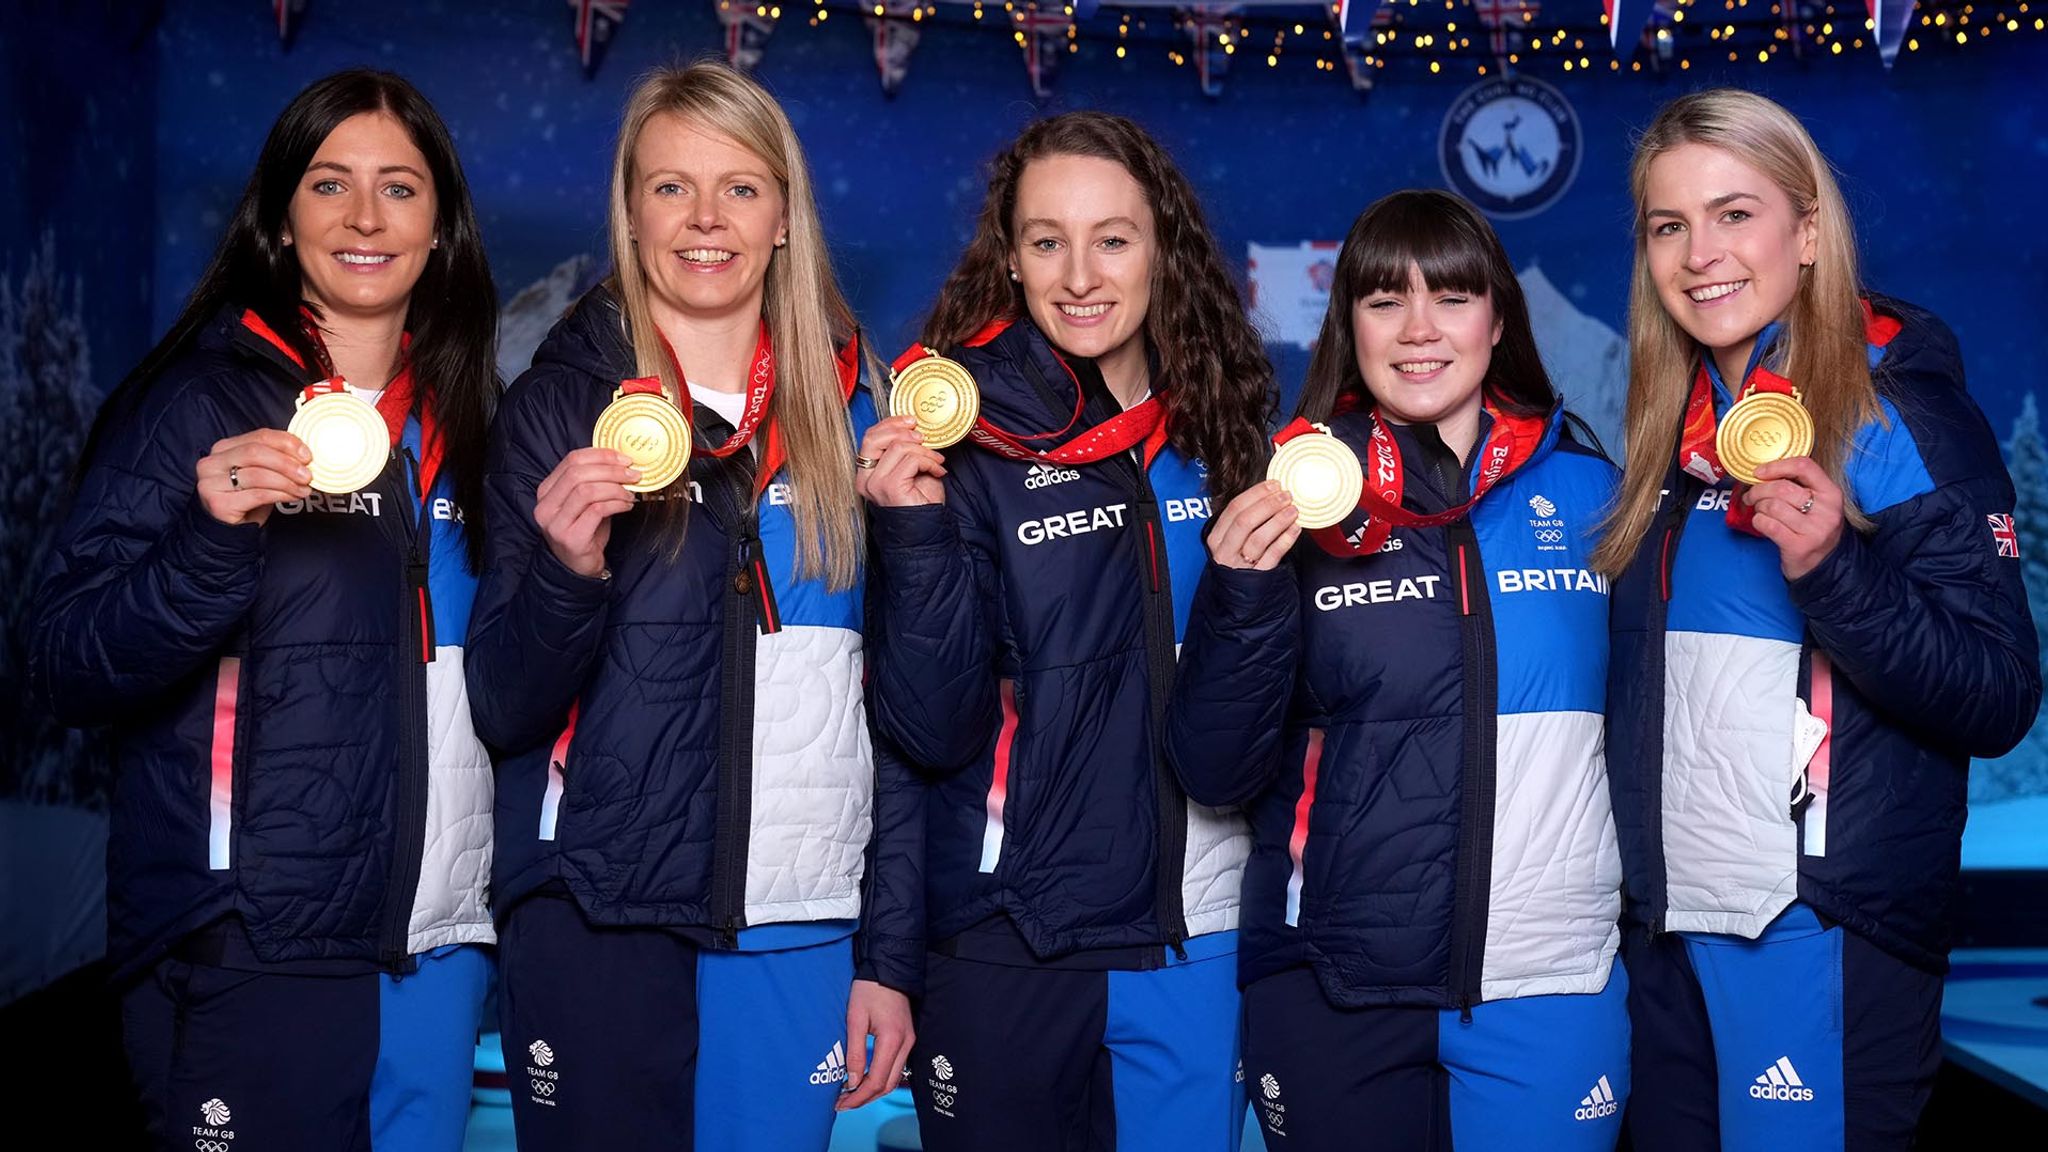 Beijing Winter Olympics: Team GB's women's curling team arrive